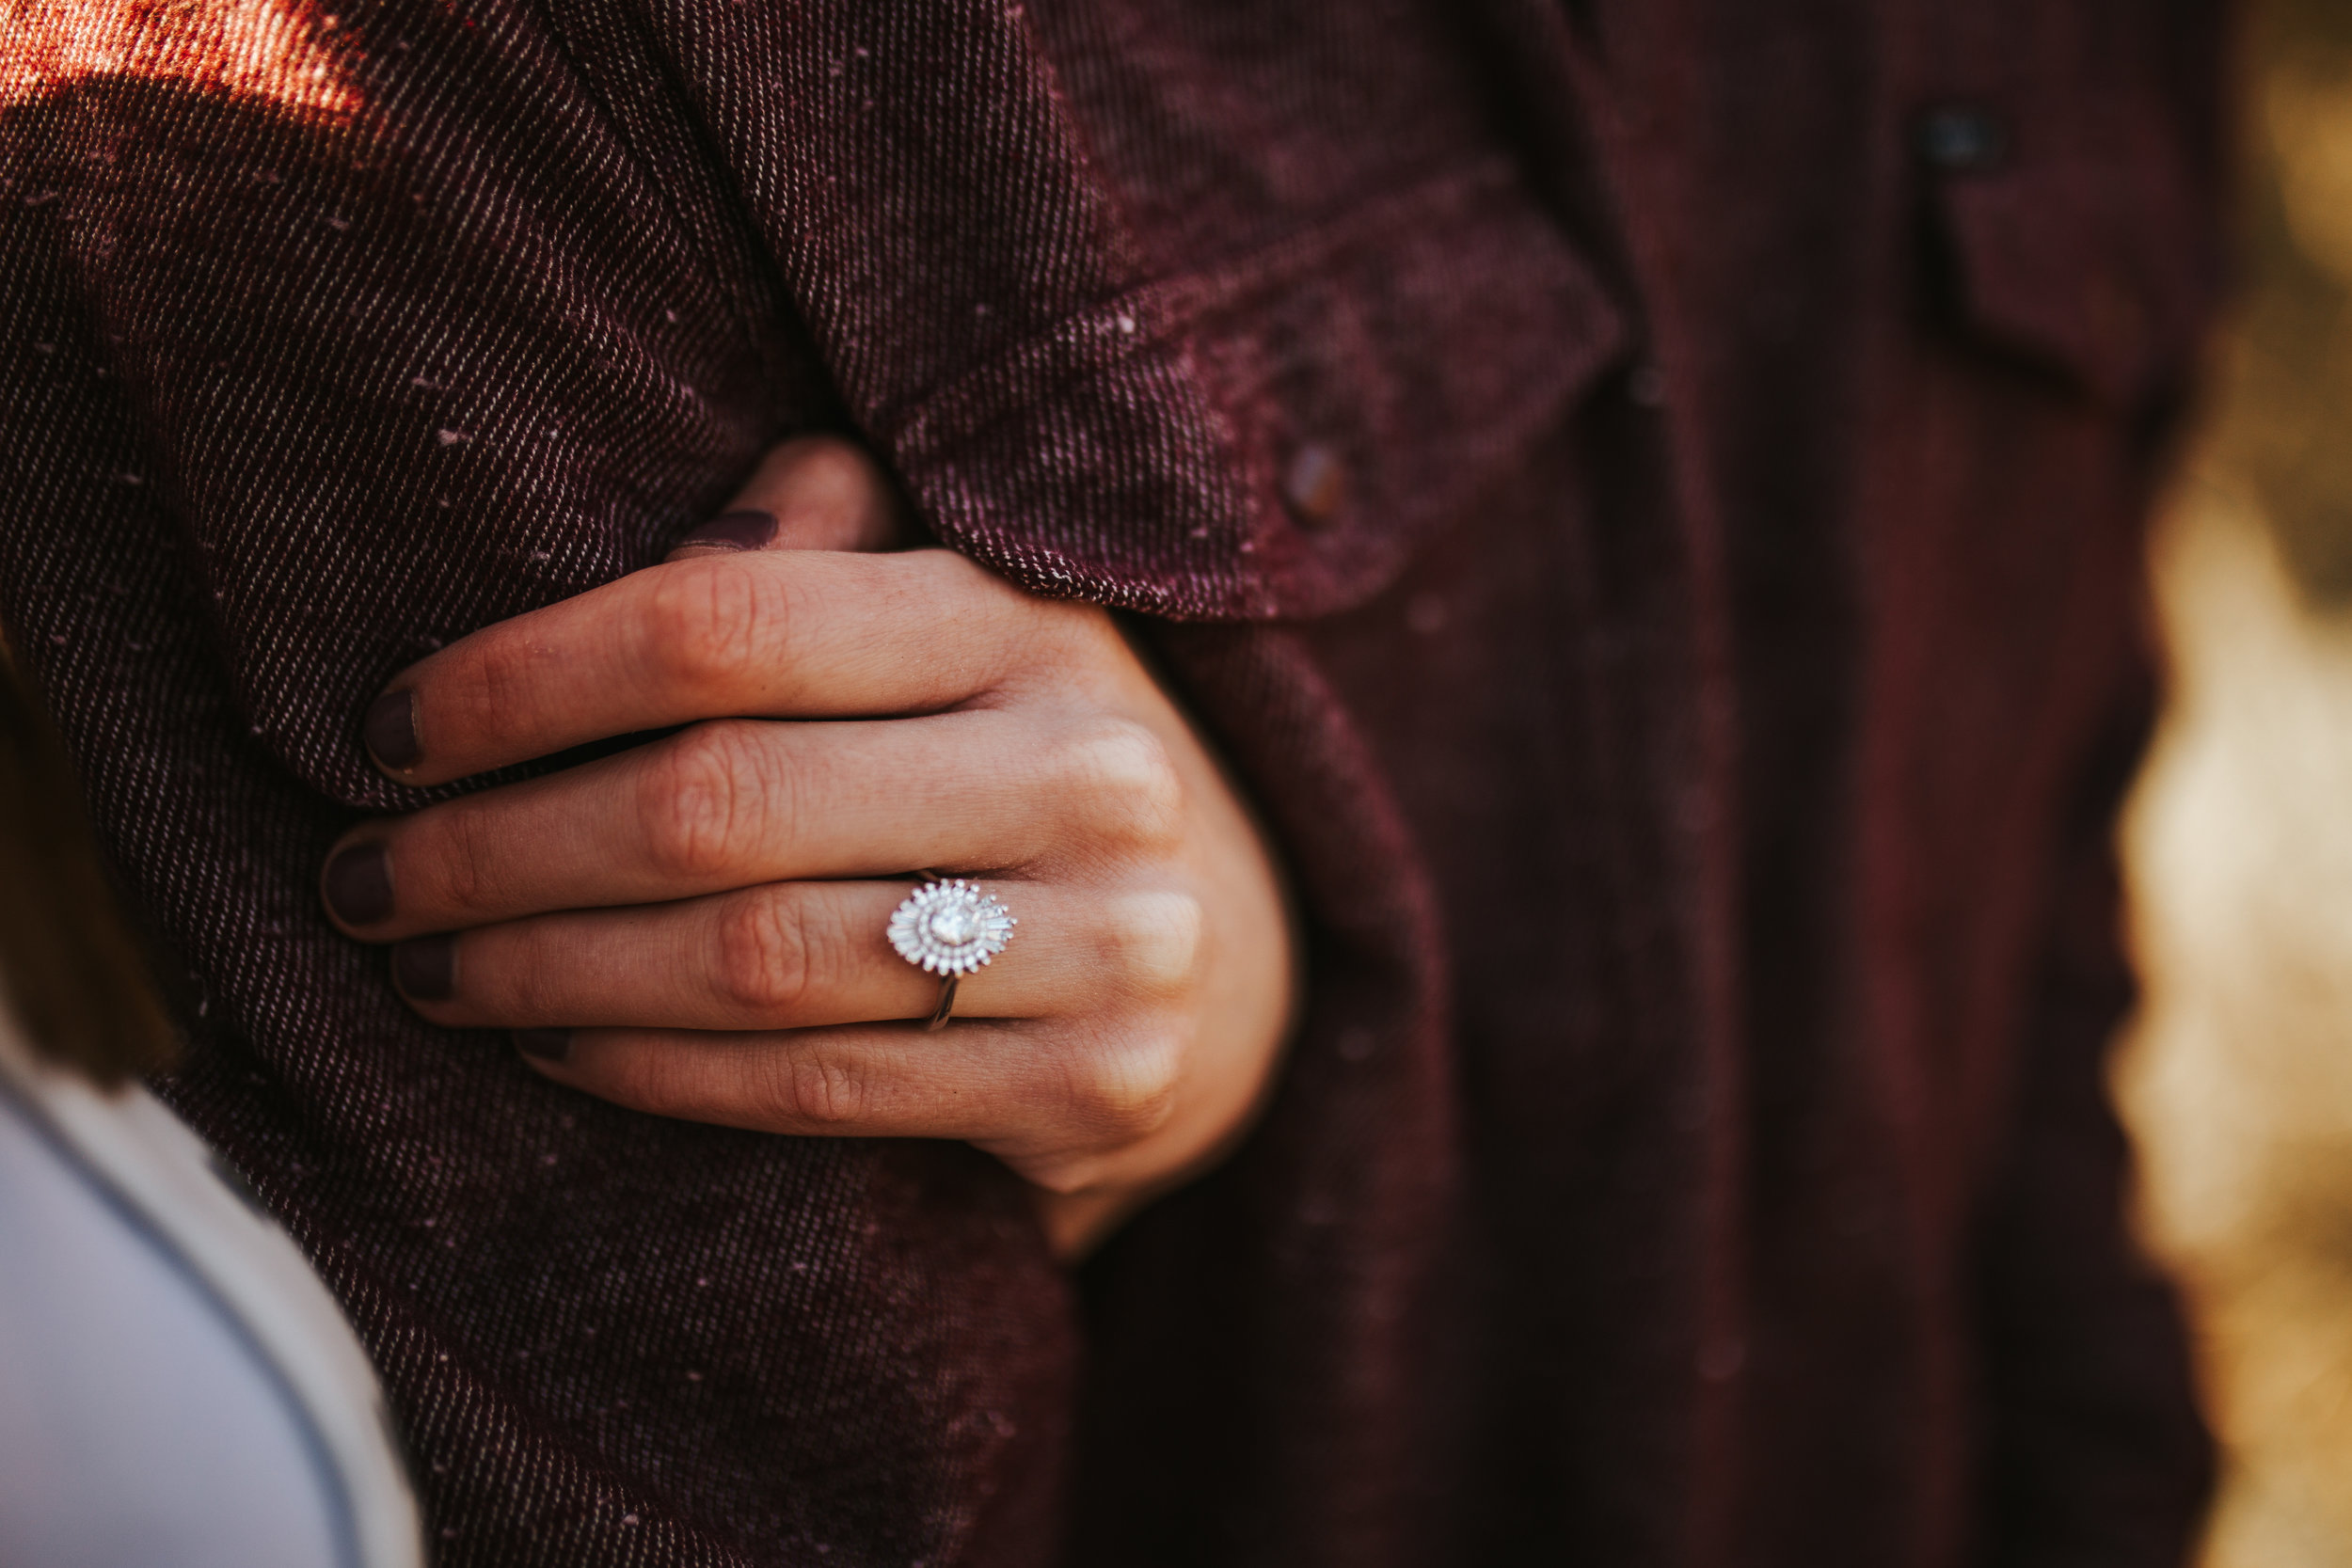 detail shot of engagement ring on female hand.